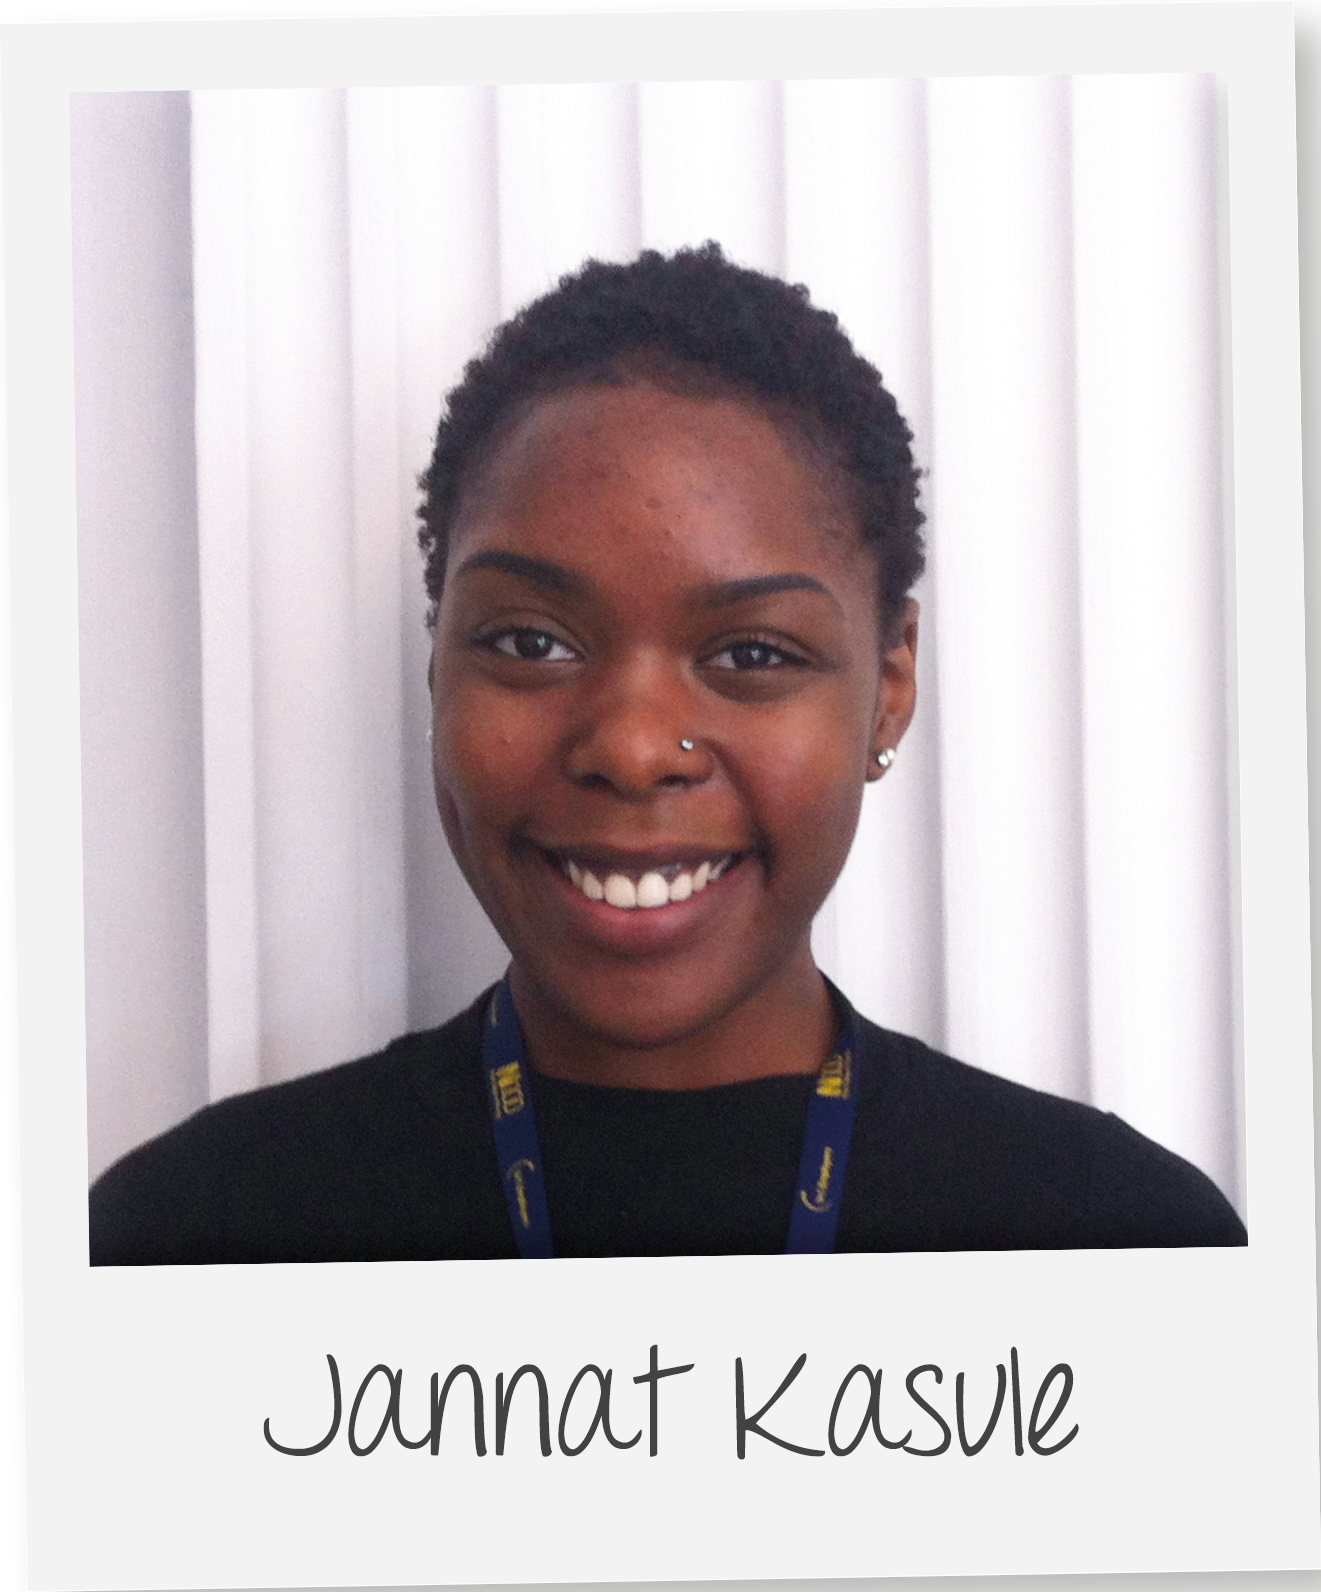 Jannat Kasule RCN student